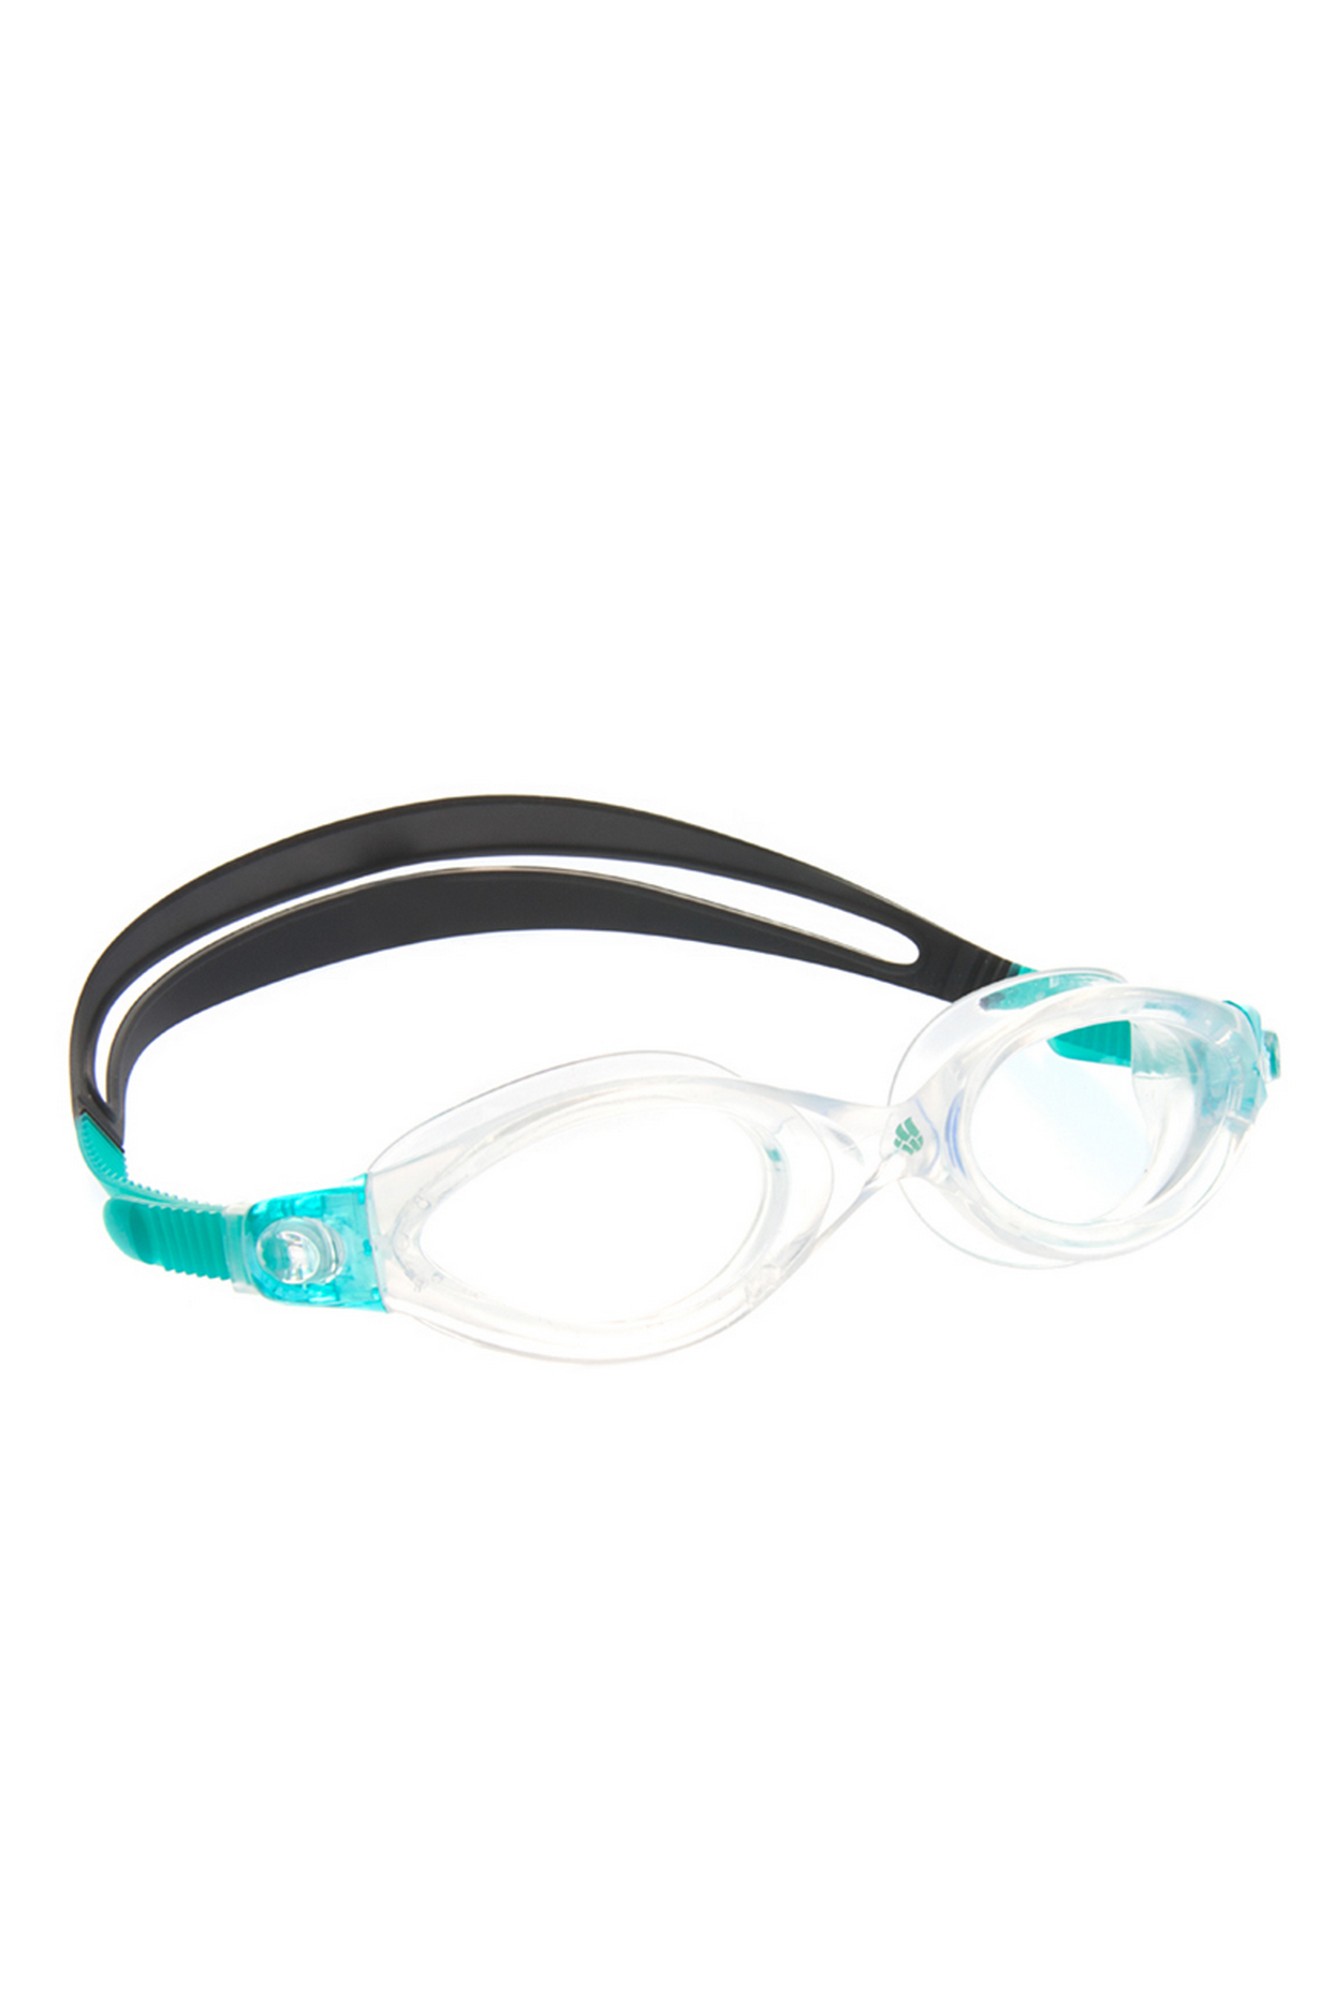 Очки для плавания Mad Wave Clear Vision CP Lens M0431 06 0 08W,  - купить со скидкой